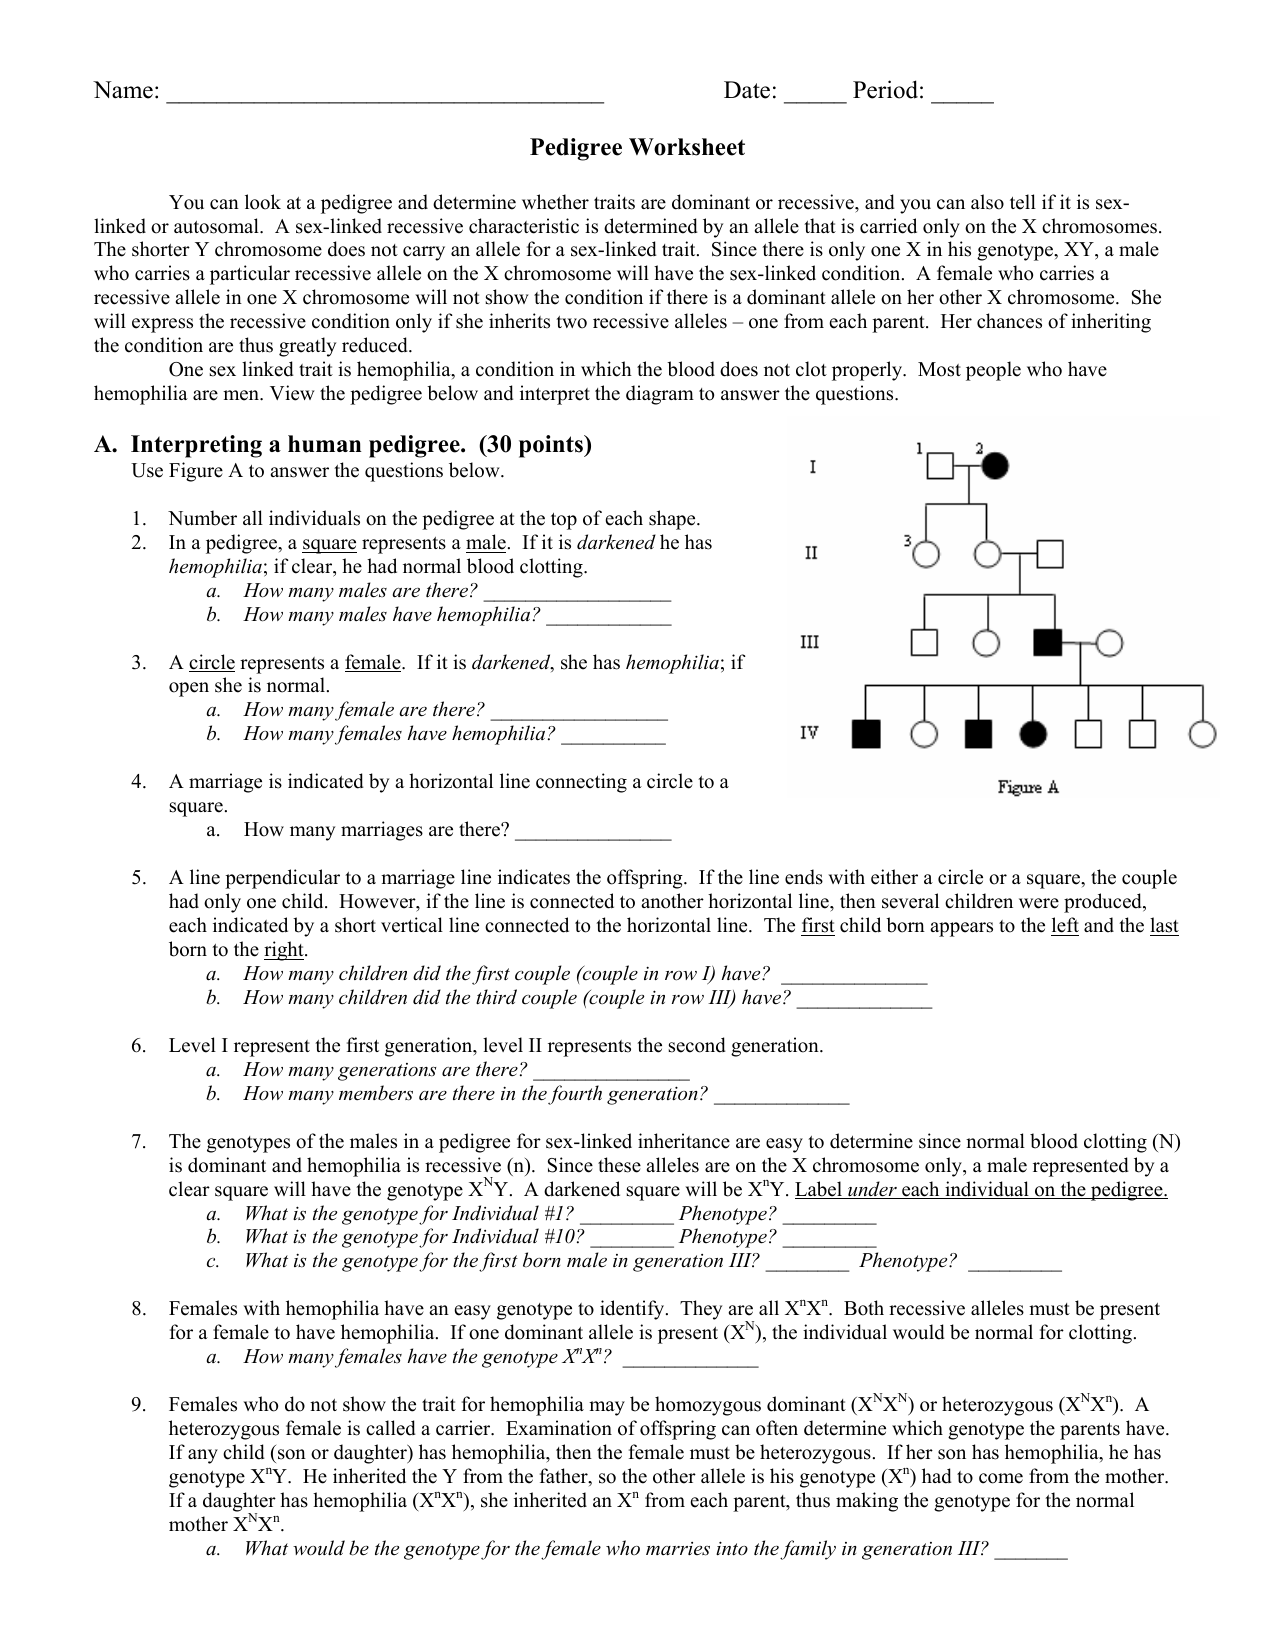 Genetics Pedigree Worksheet Answers - Nidecmege Throughout Genetics Pedigree Worksheet Answers